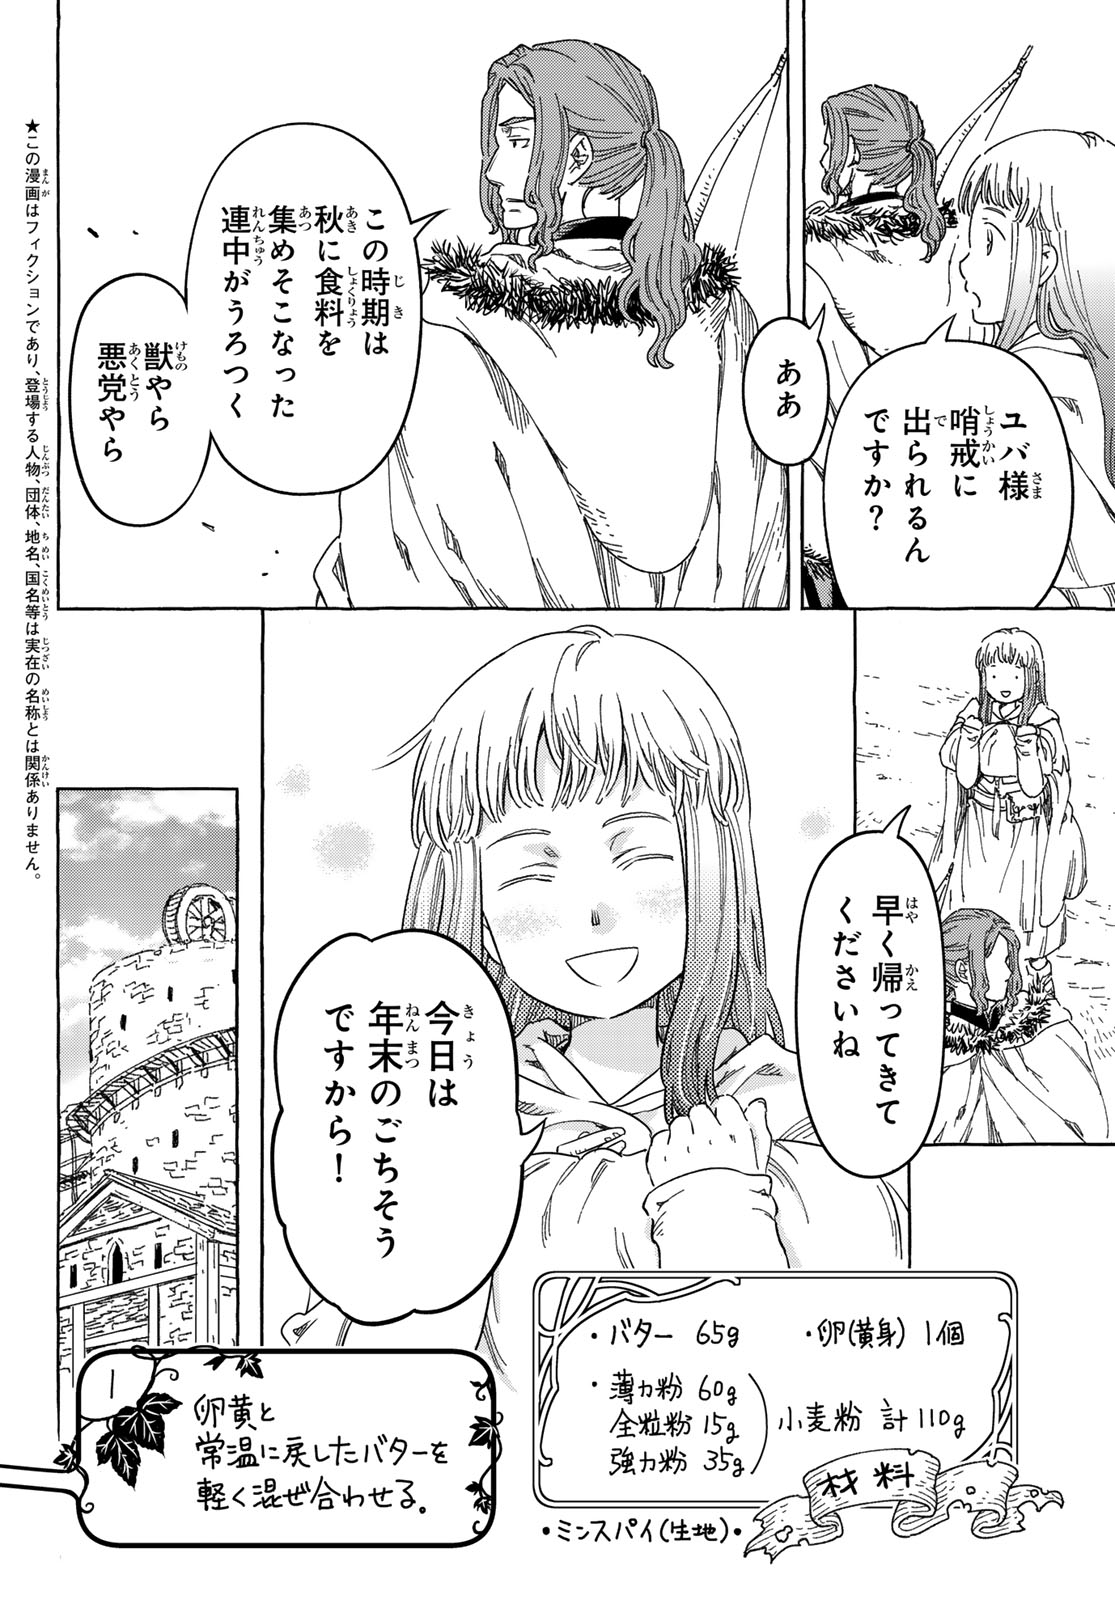 Kishi Ou no Shokutaku - Chapter 11 - Page 2